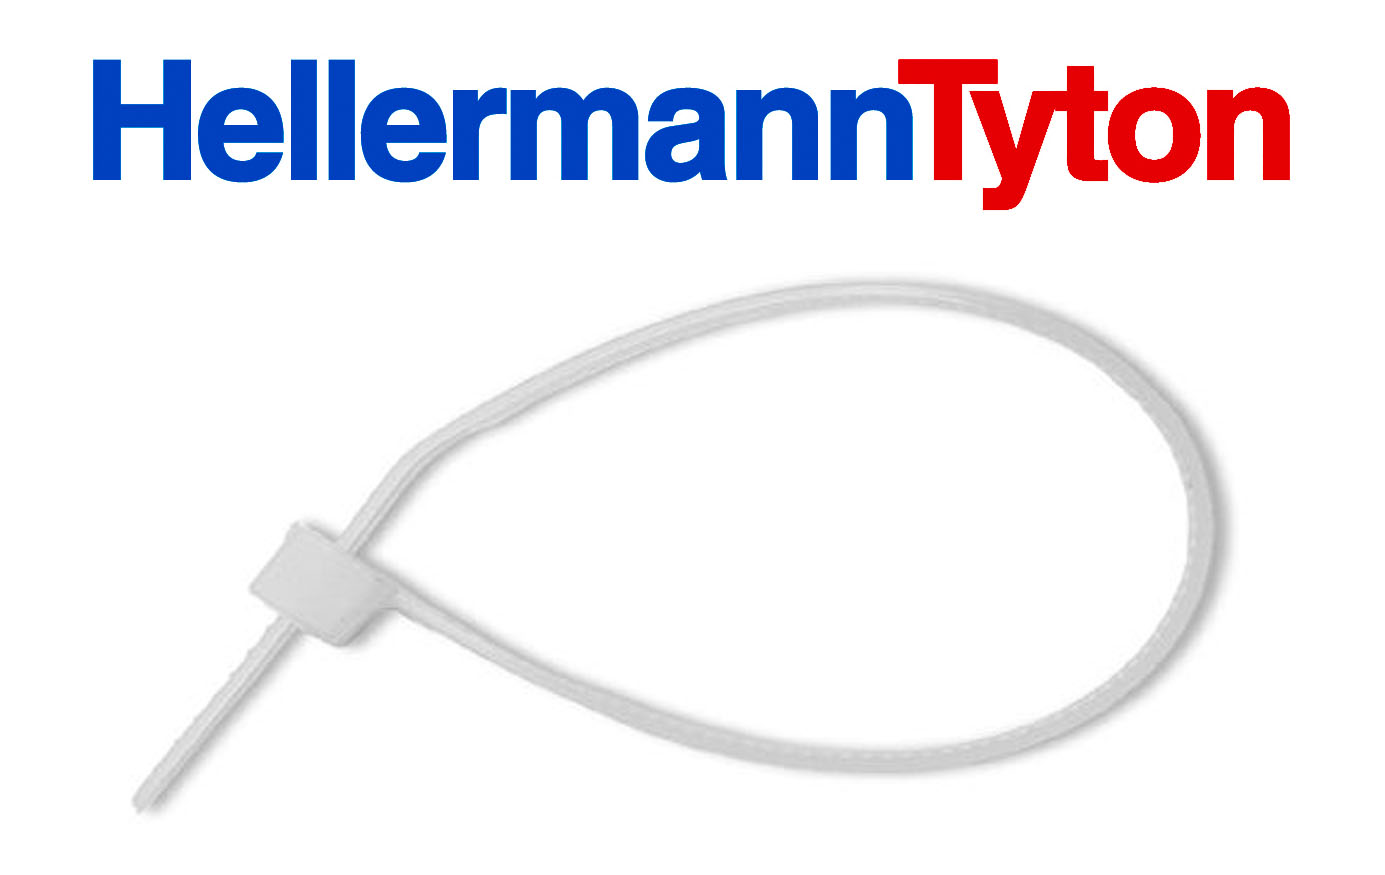 Hellerman Tyton Logo - Manufacturer